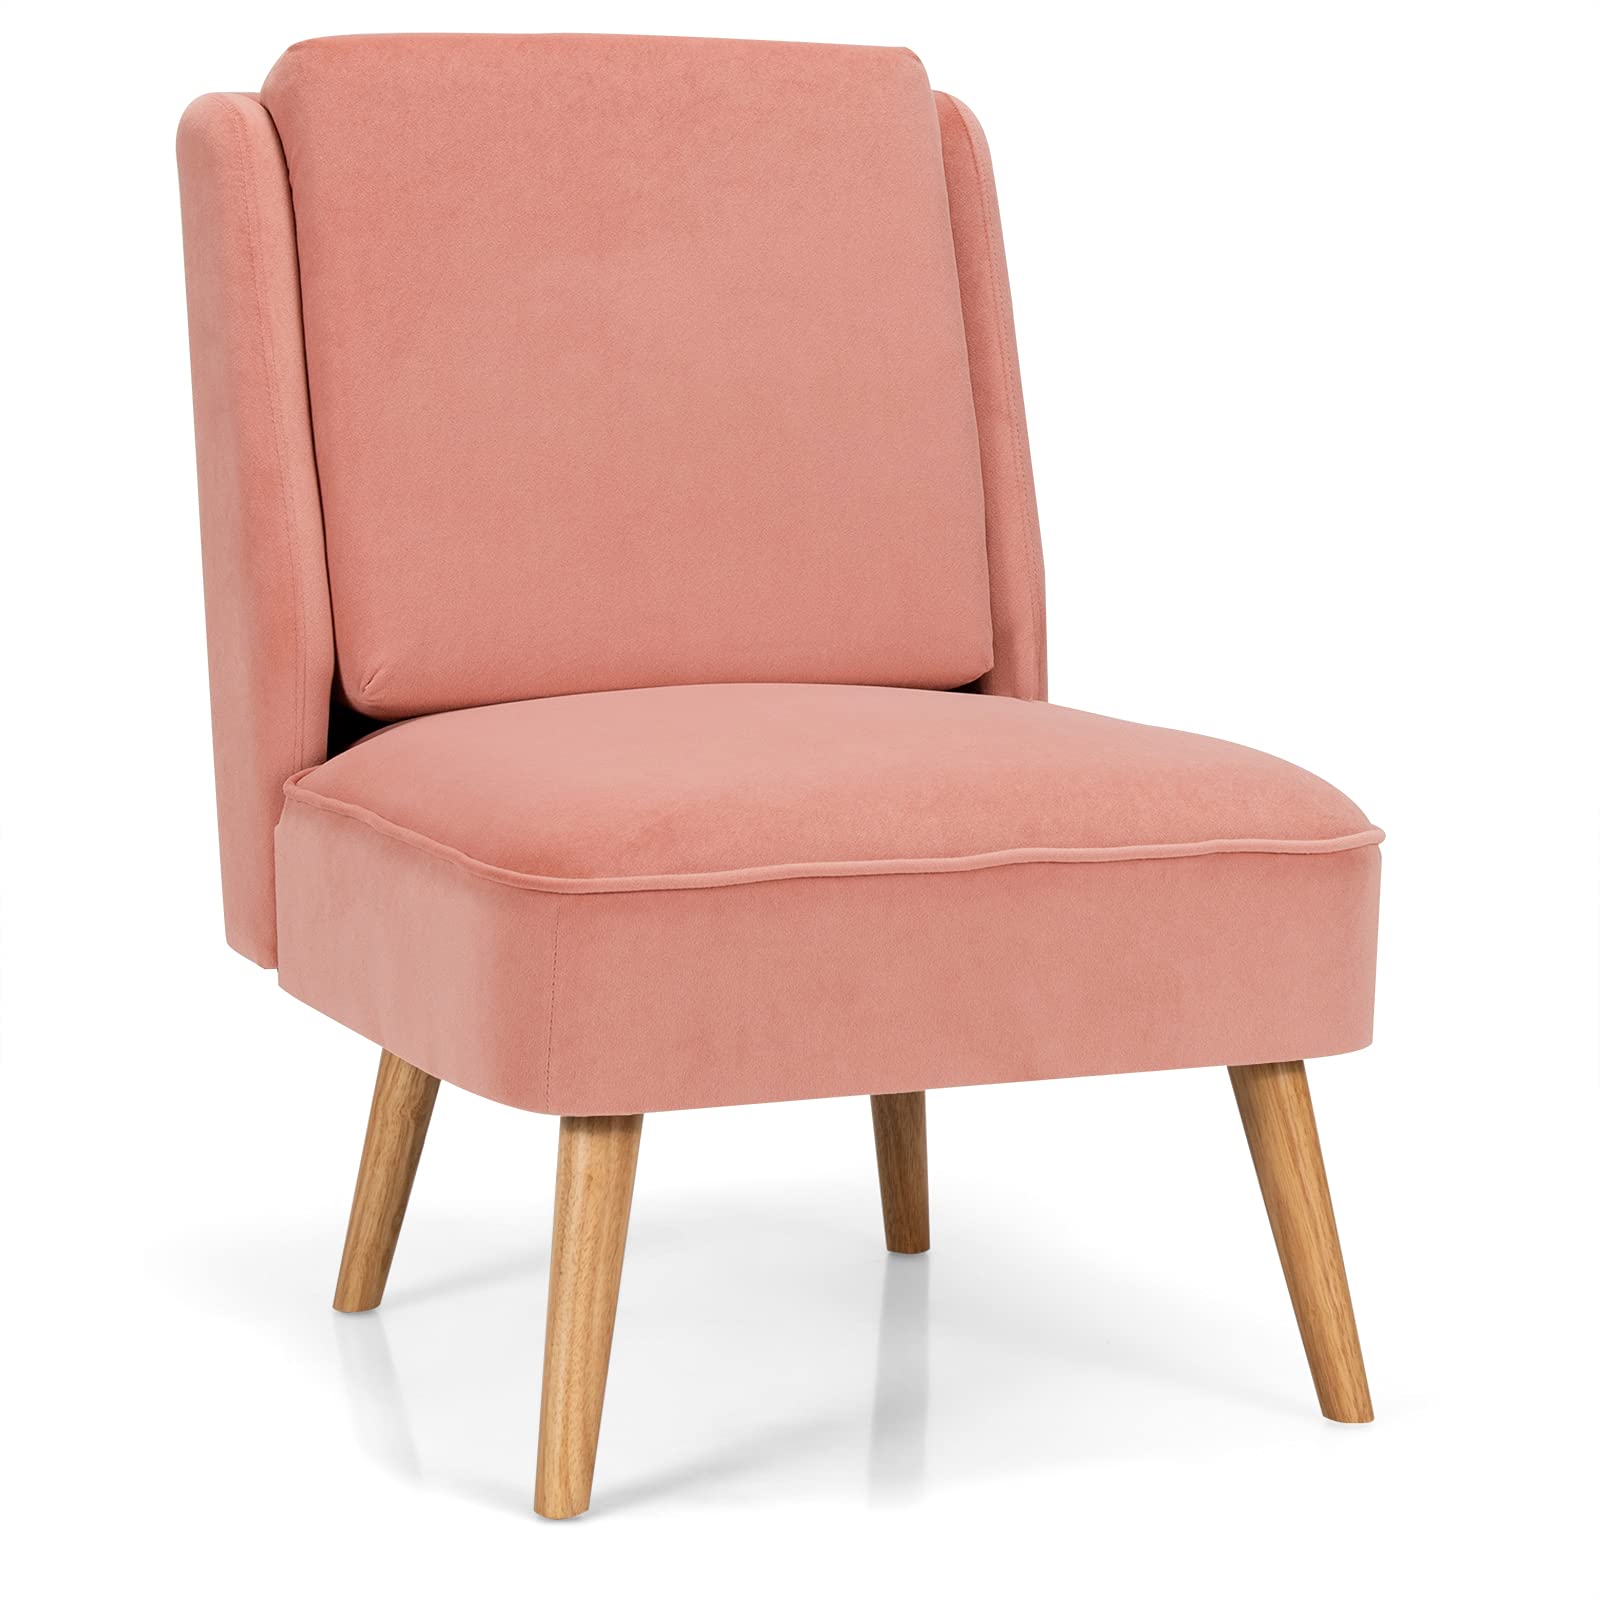 Giantex Comfy Single Sofa Chair w/Rubber Wood Legs